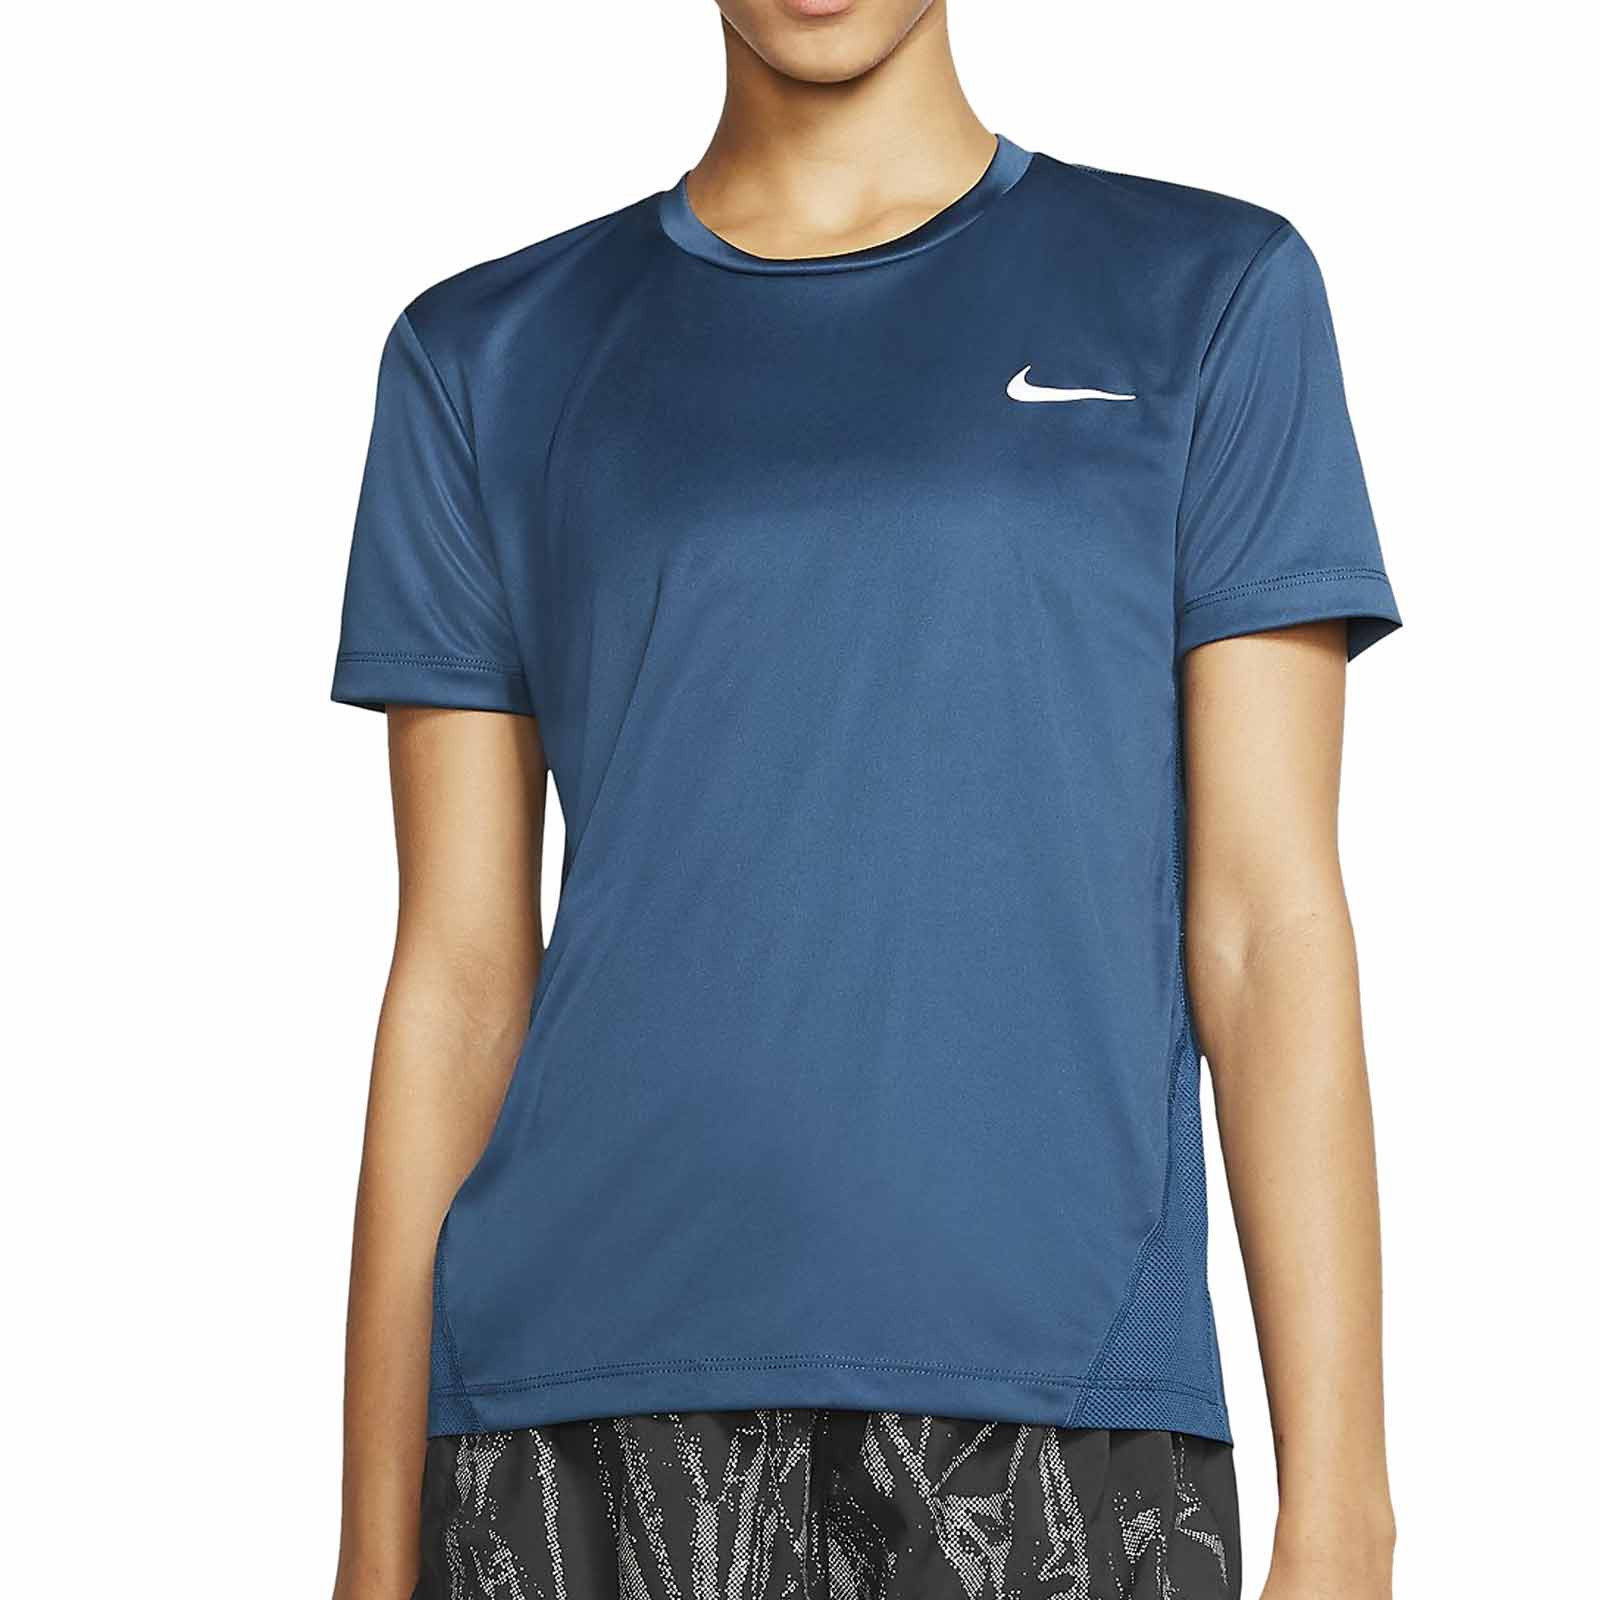 Camiseta mujer Nike Miler azul marino